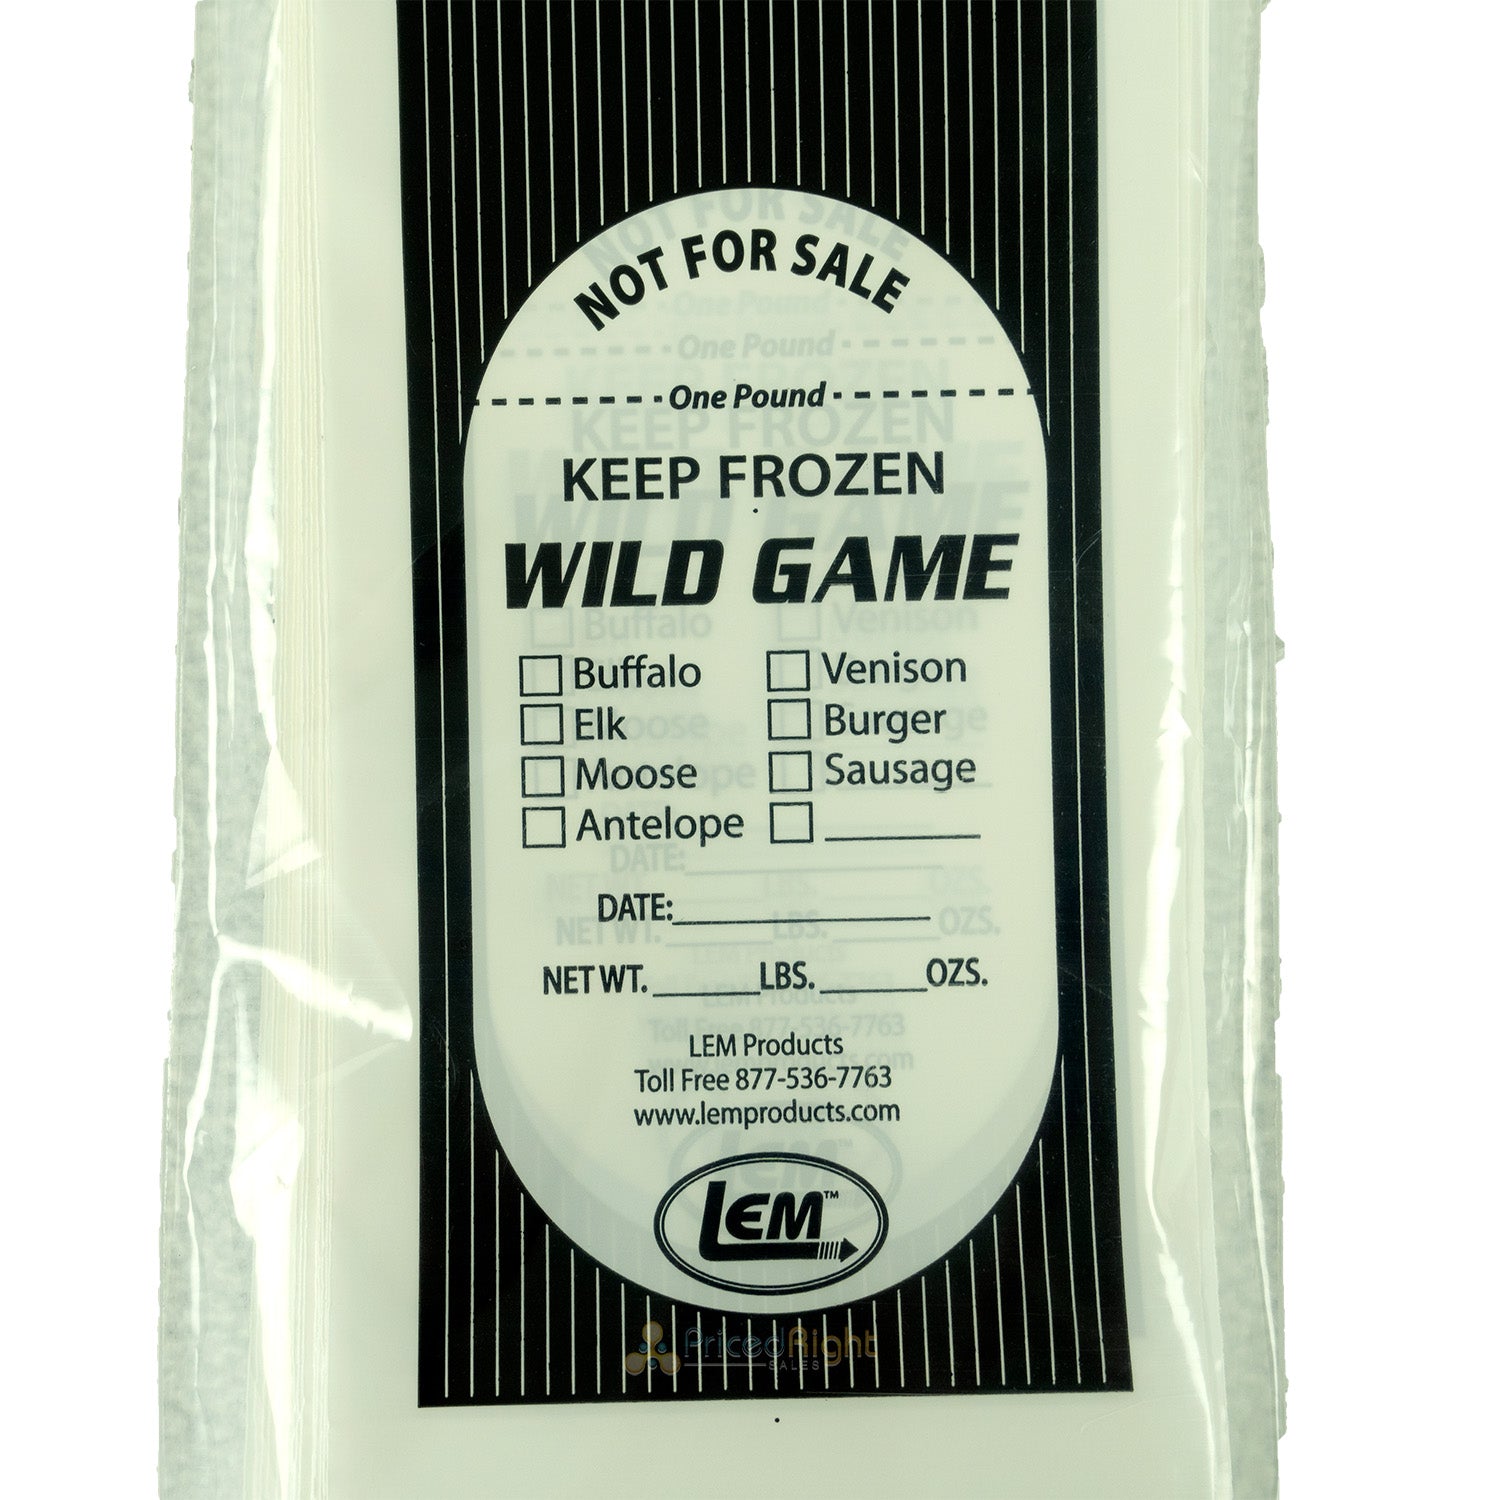 LEM Wild Game Bags 2 Pound Freezer Storage 100 Count Ground Meat